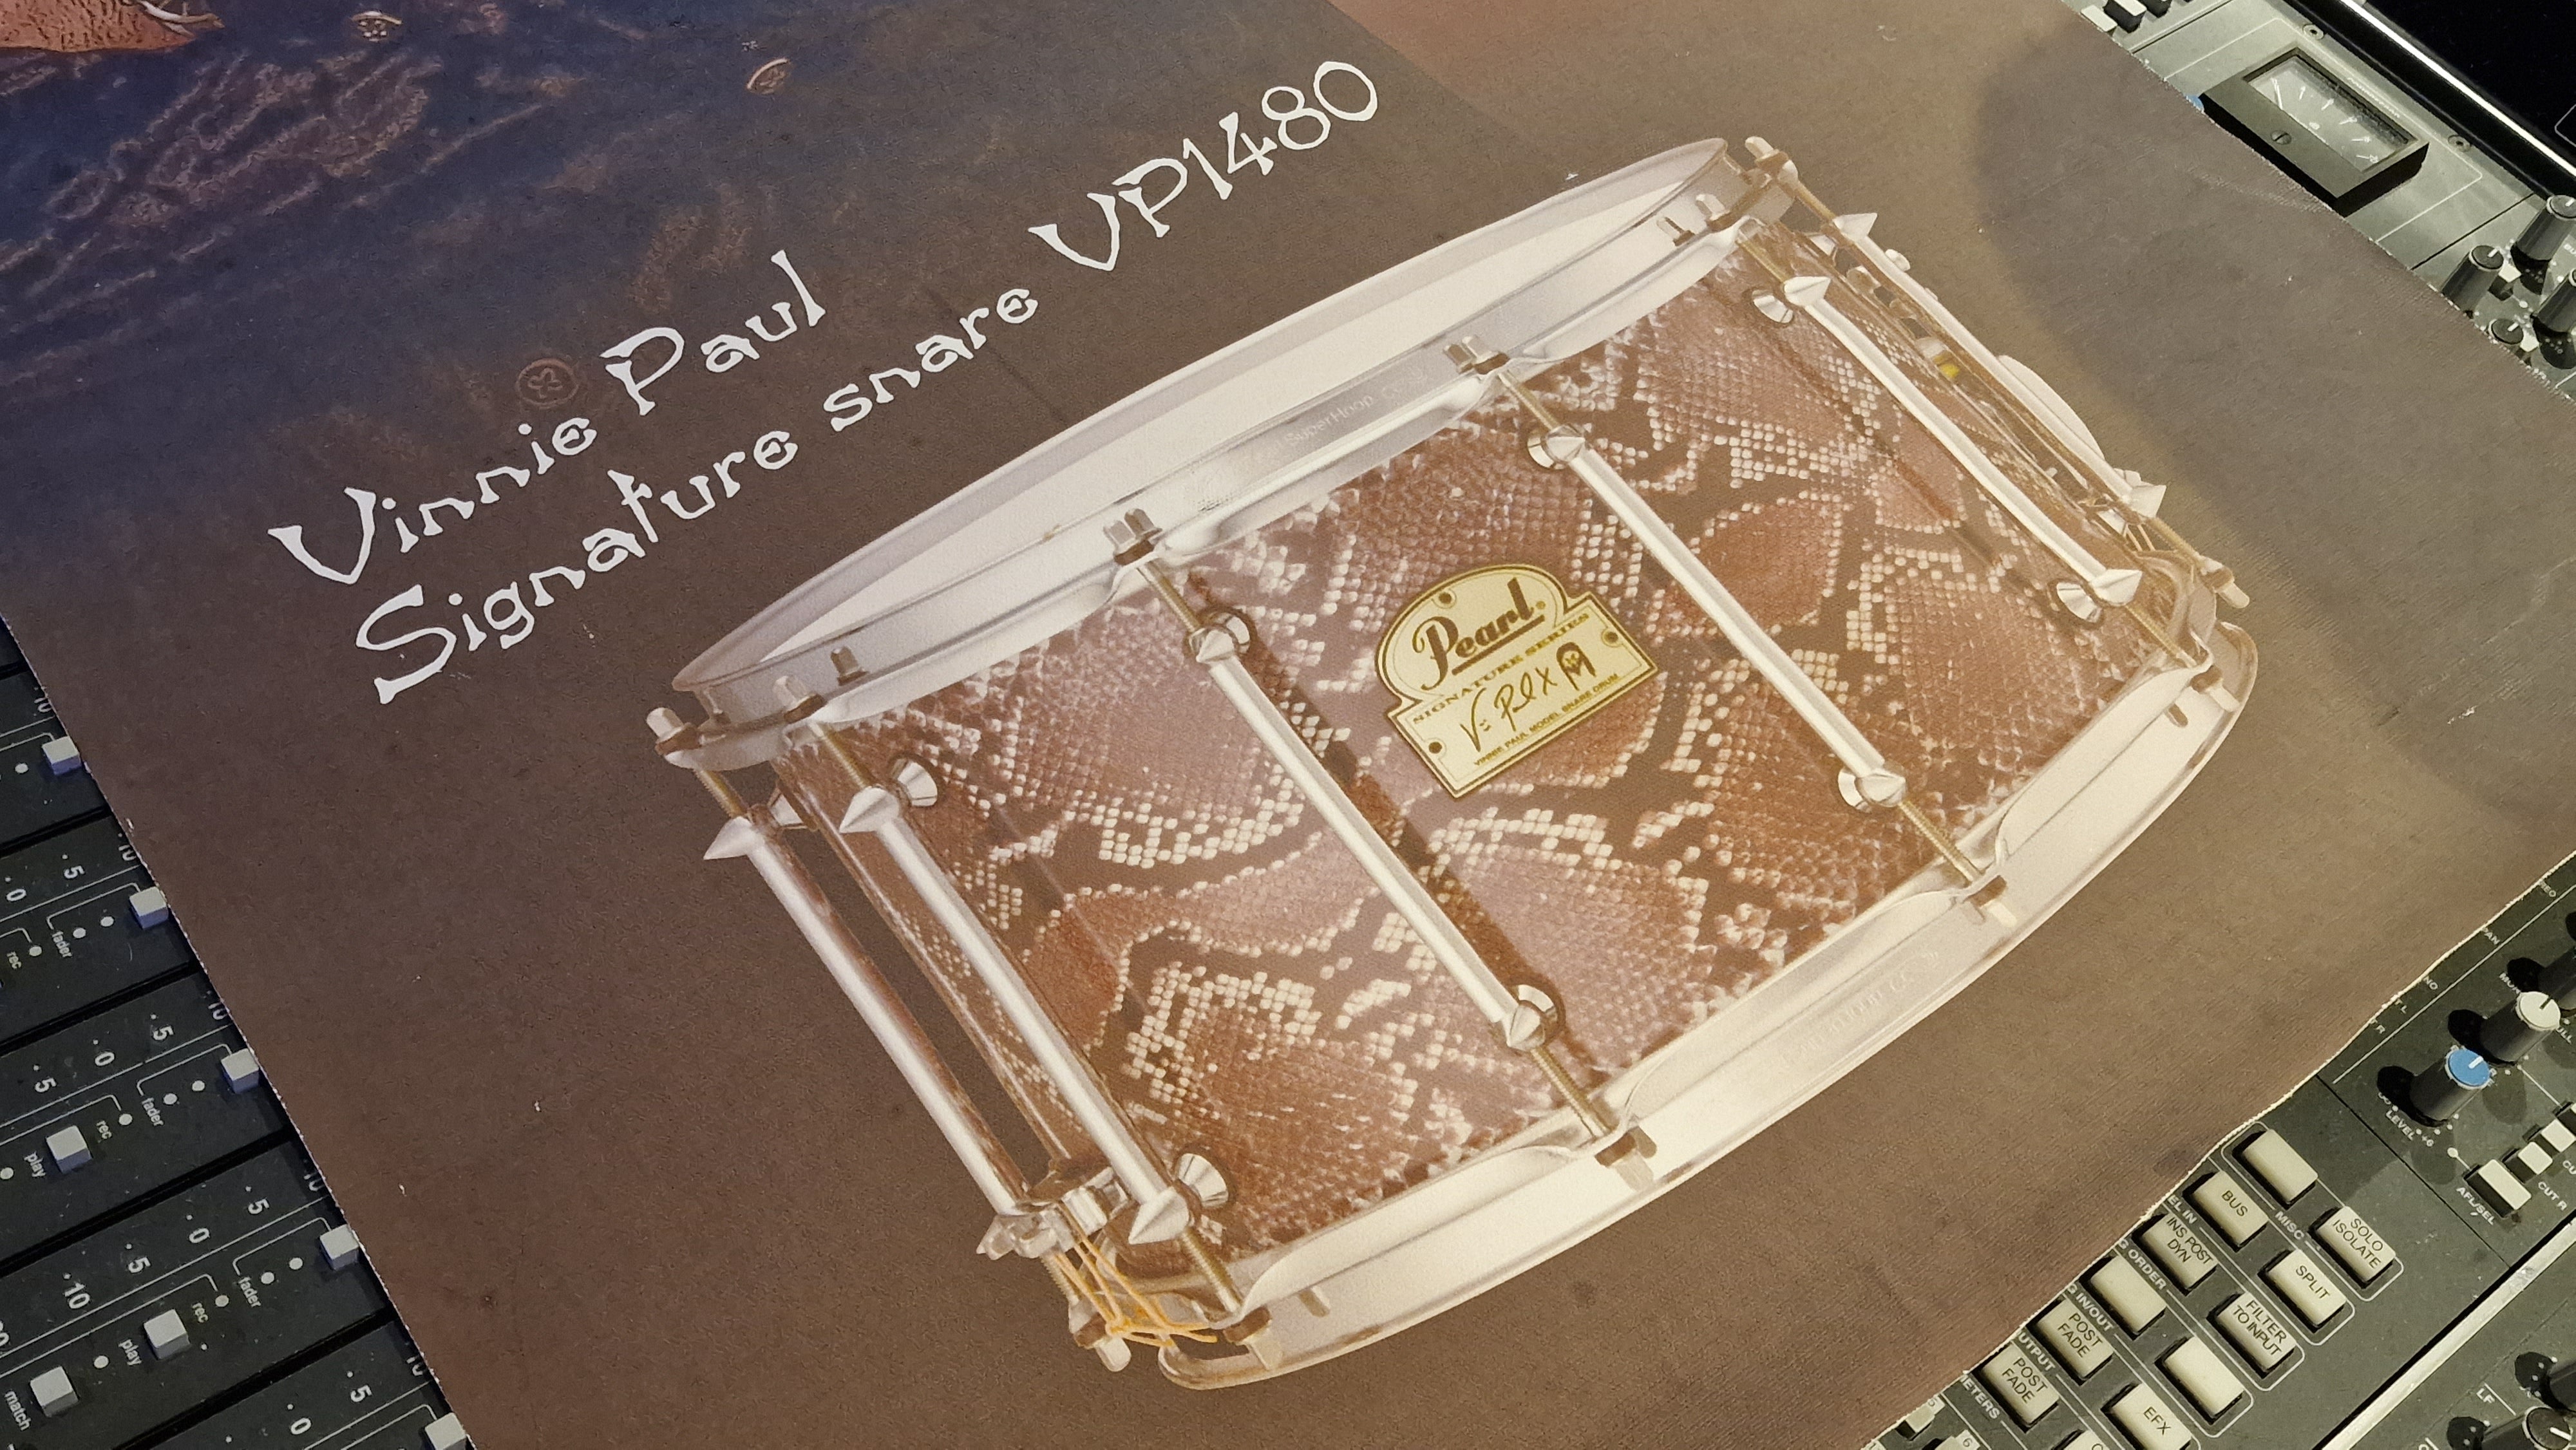 Pearl Vinnie Paul Signature Snare Drum 14x8 VP1480 Pantera Prototype Artist Owned by Vinnie